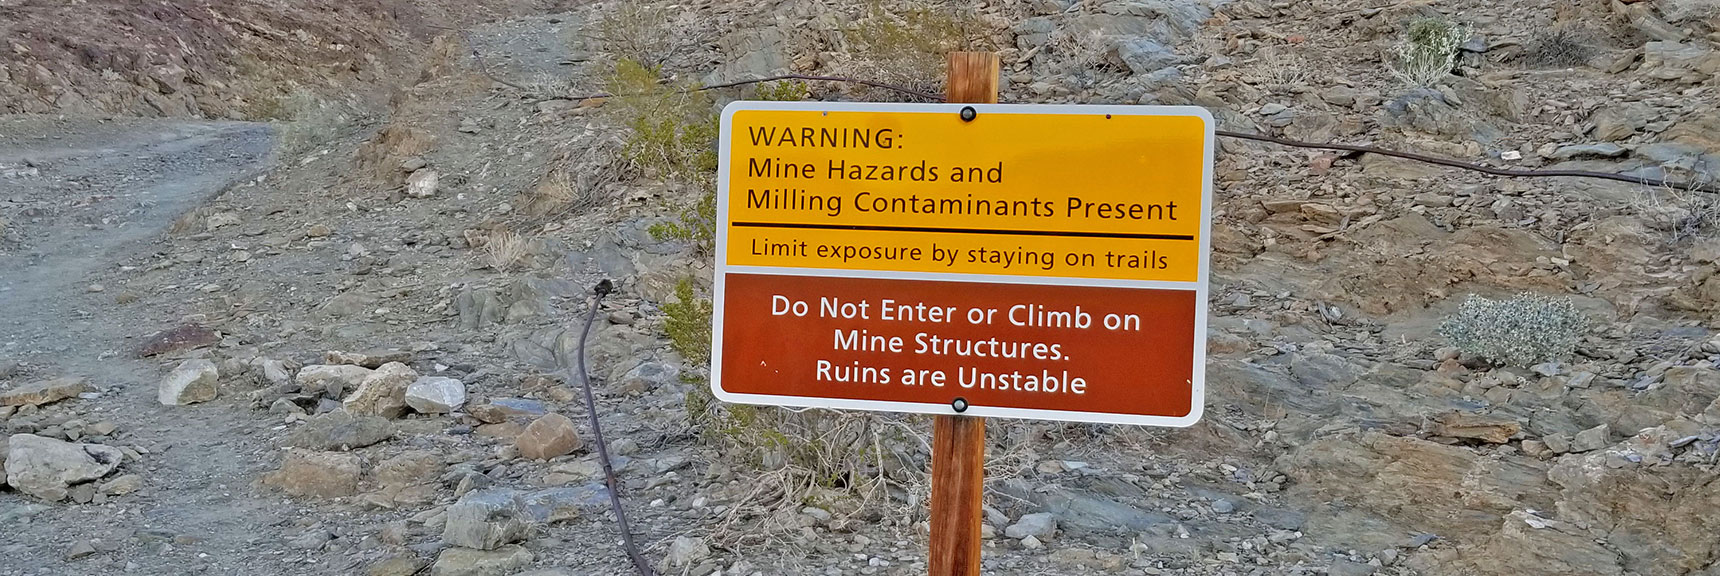 Many Warnings Indicating Mine Hazards | Keane Wonder Mine | Death Valley National Park, California